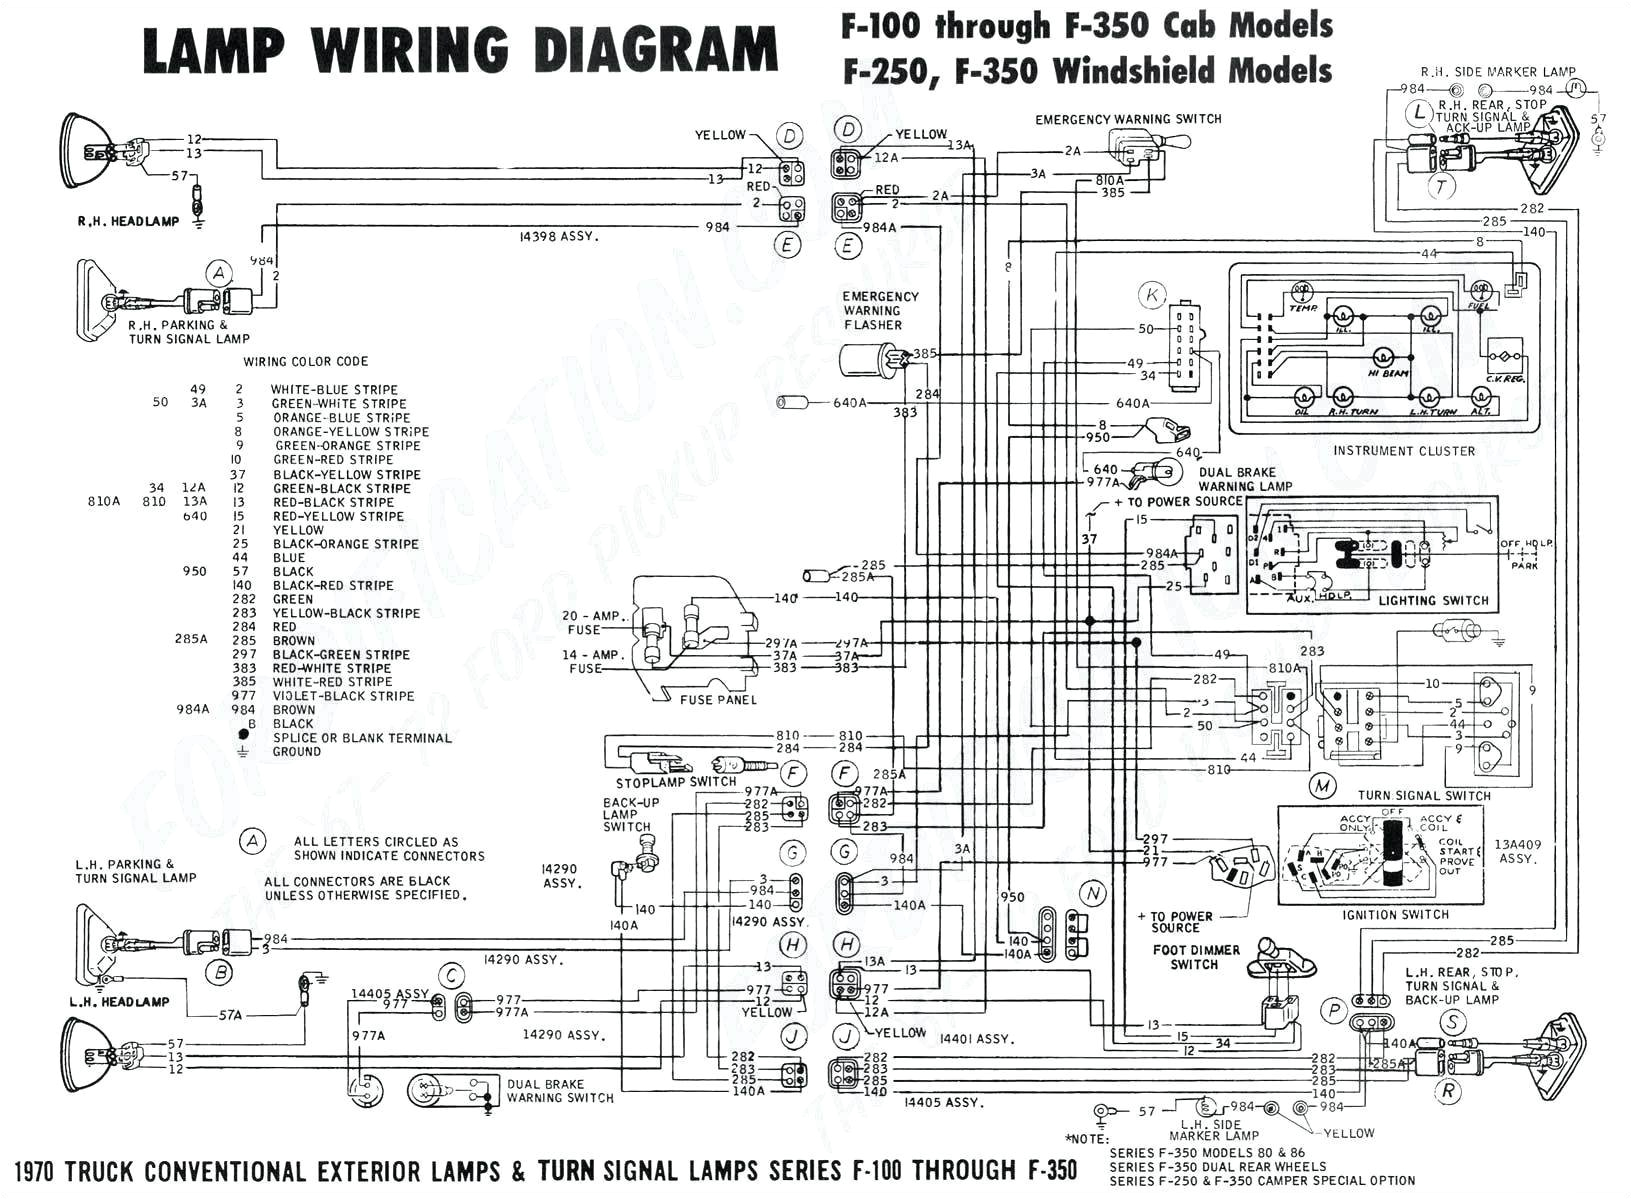 Honda Wave 100 Wiring Diagram Wiring Diagram Of Honda 125 Motorcycle Wiring Diagram Database